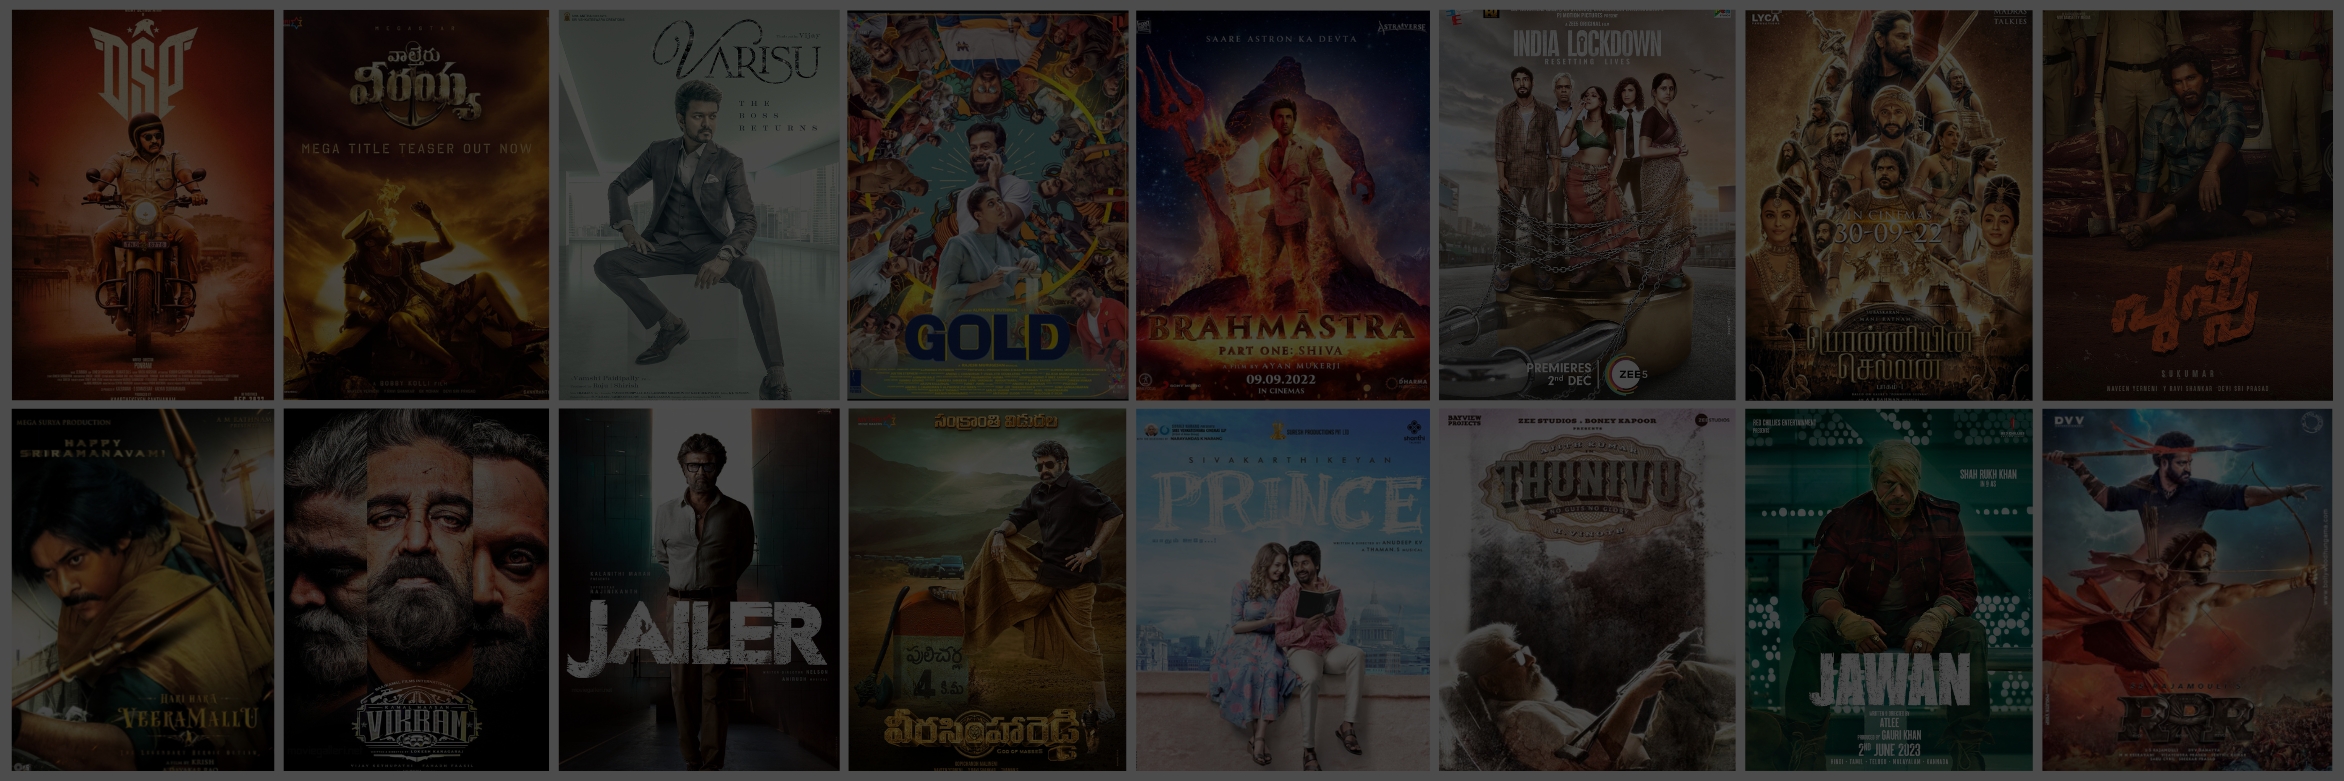 Hindi Movie Ramayana: The Epic Photos, Videos, Reviews